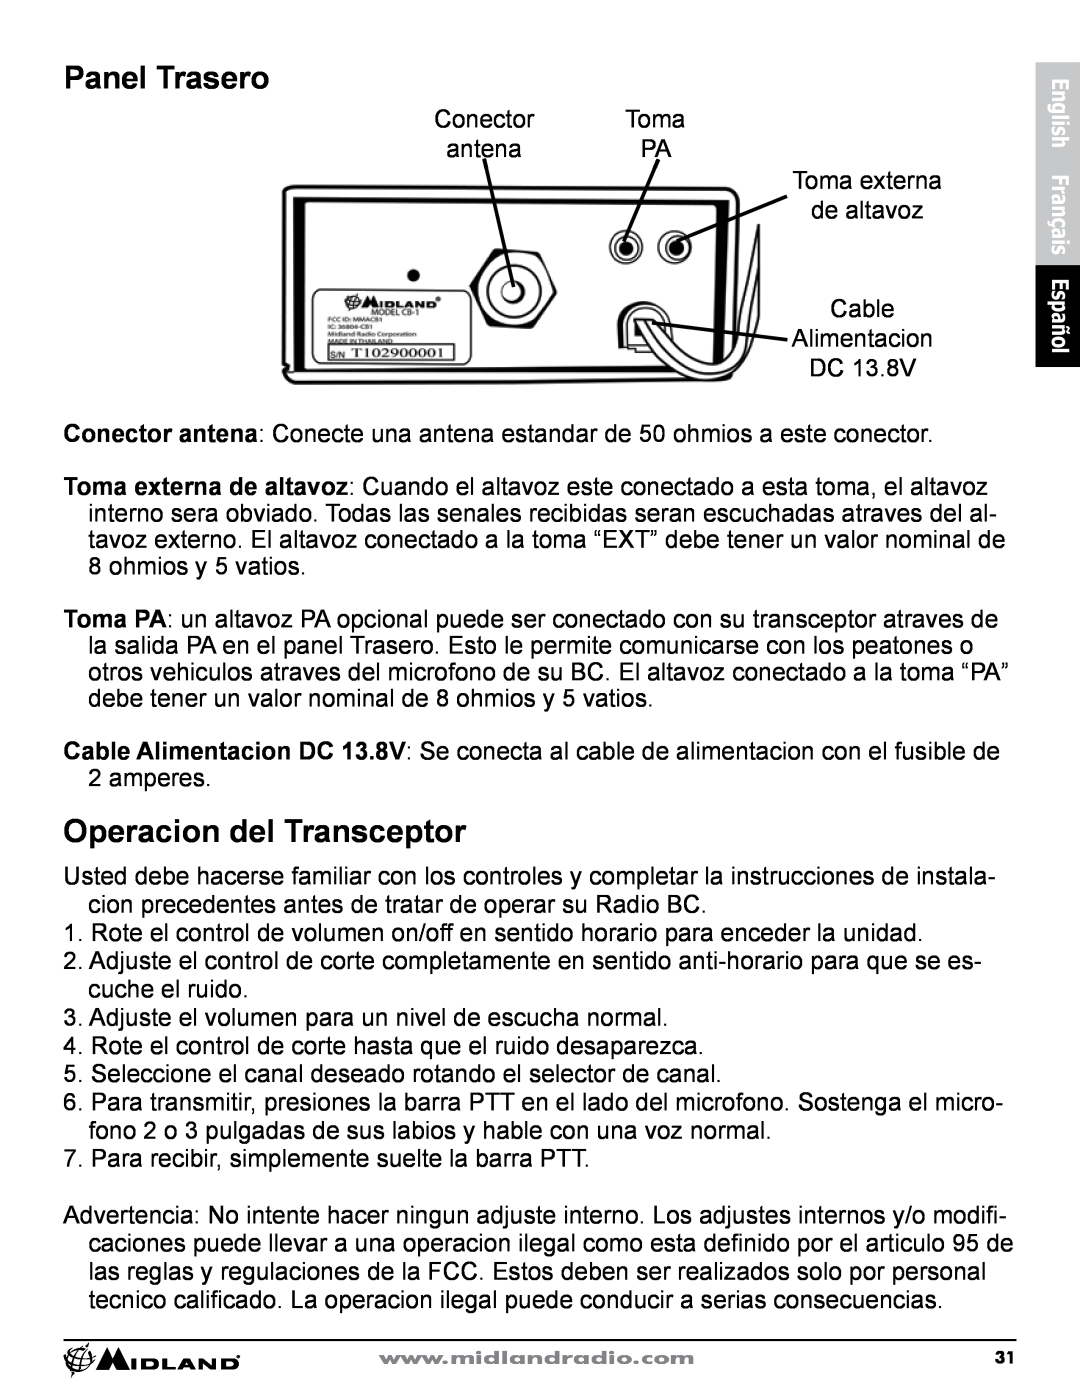 Midland Radio CB-1 owner manual Panel Trasero, Operacion del Transceptor 